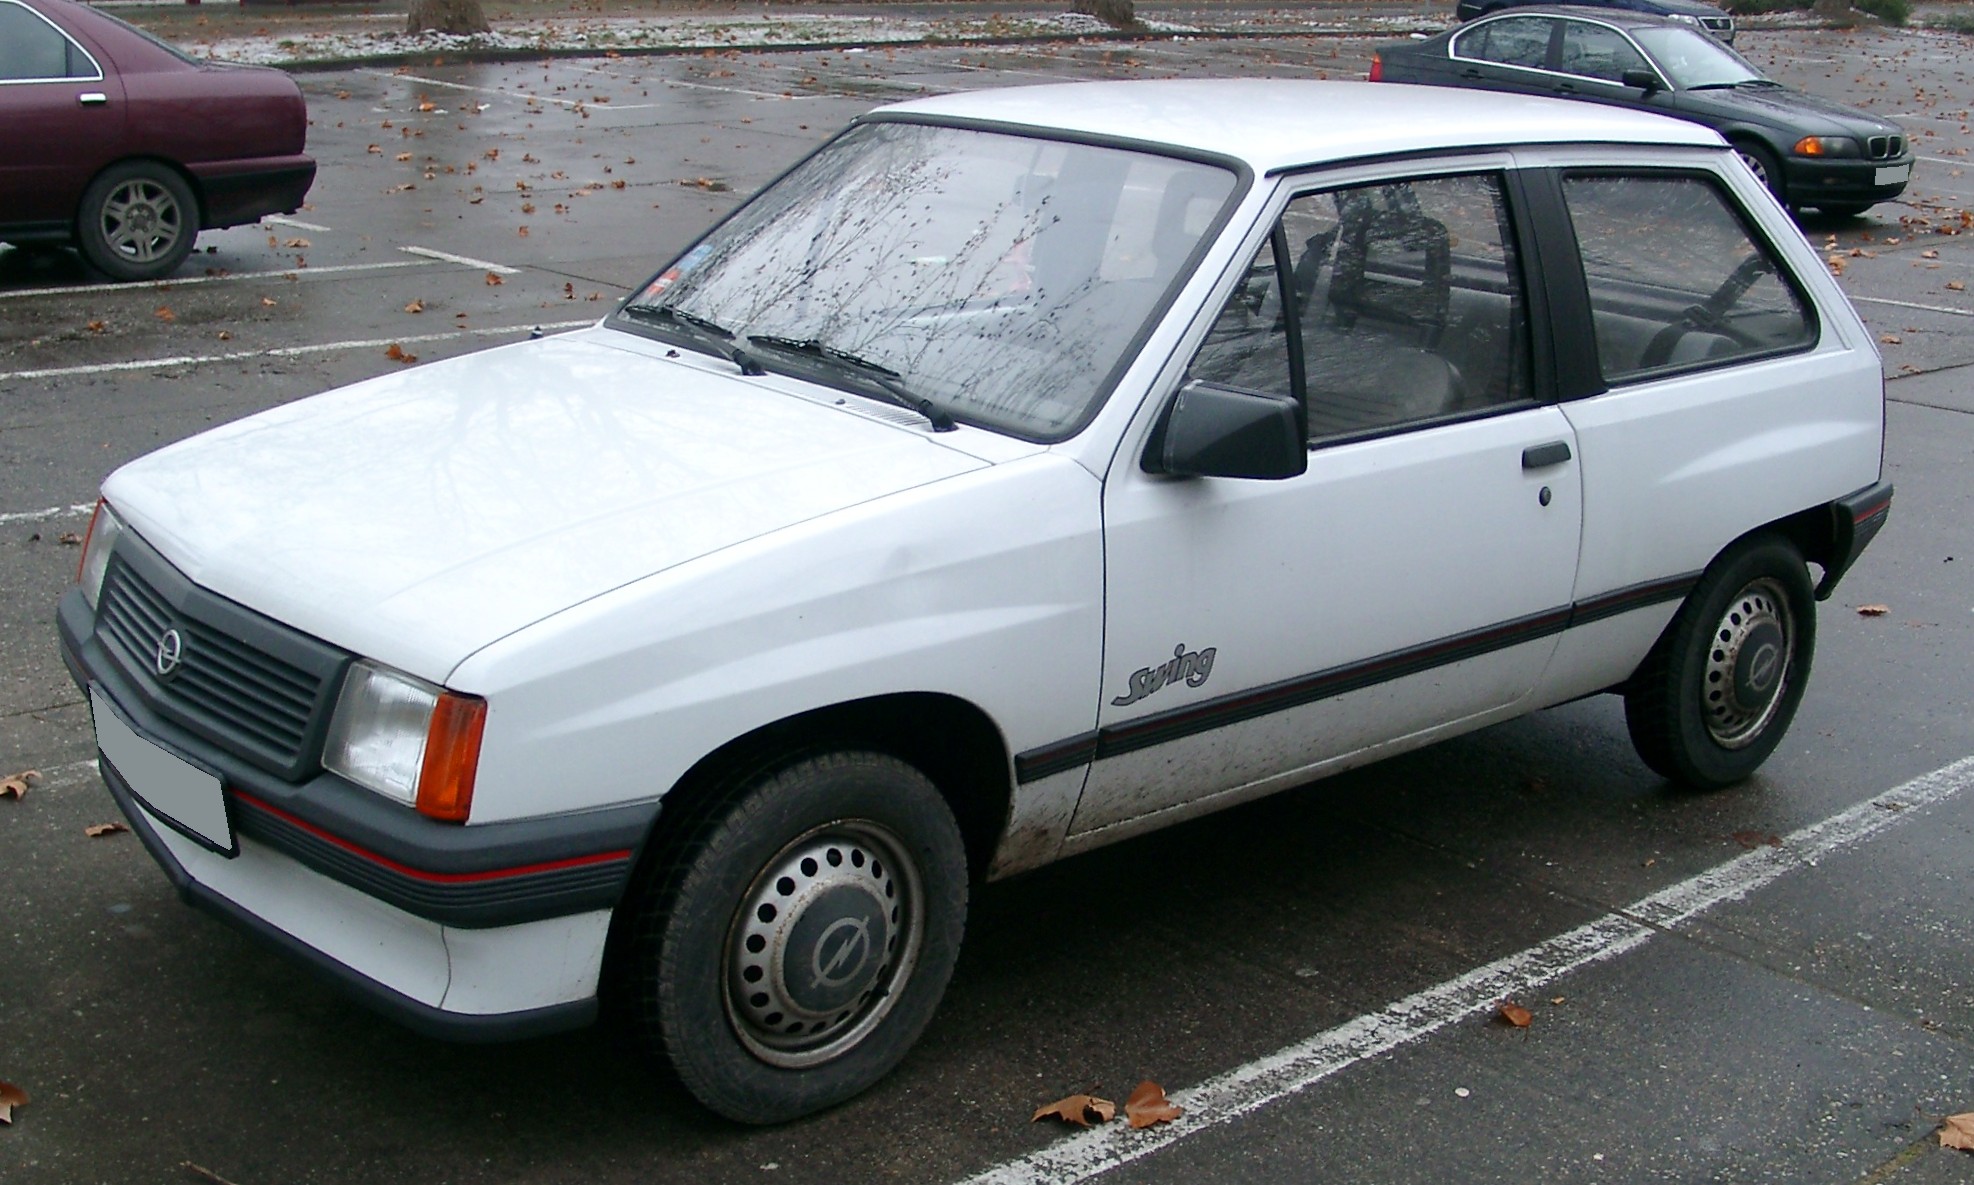 File:Opel Corsa D front.jpg - Wikimedia Commons